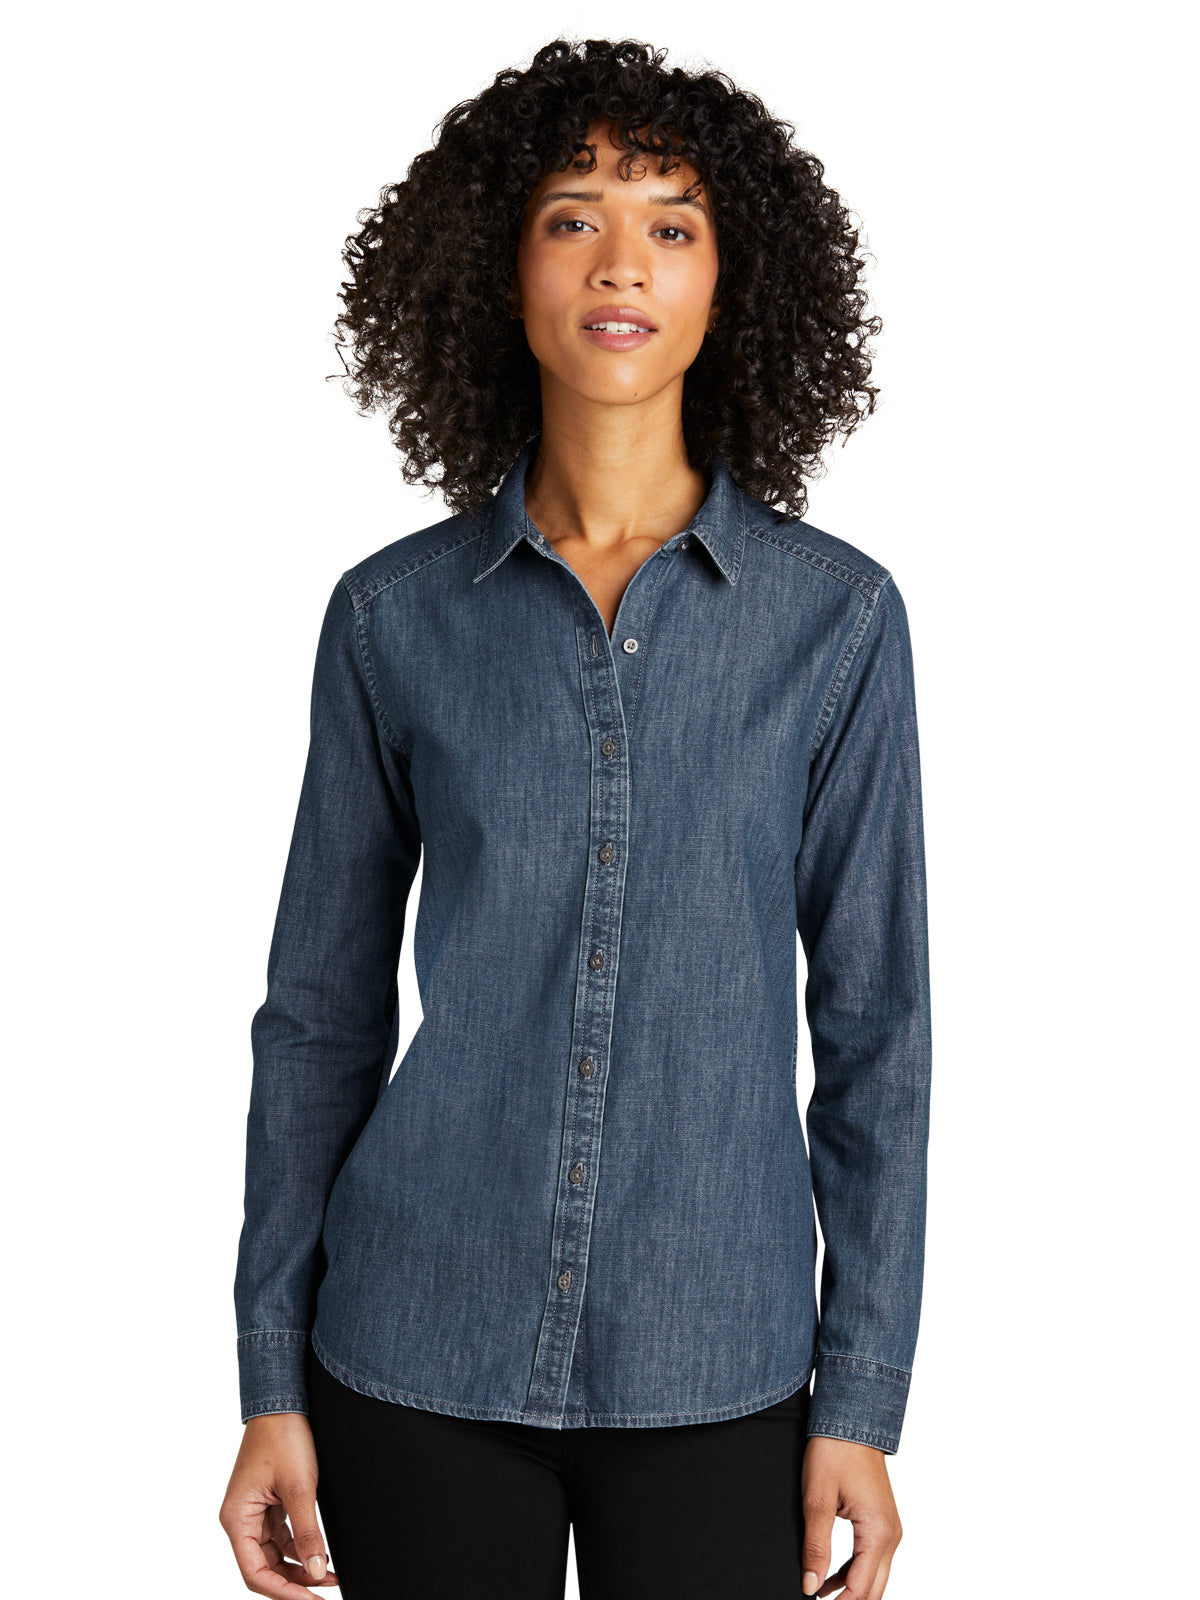 Women's Long Sleeve Shirt - LW676 - Medium Wash